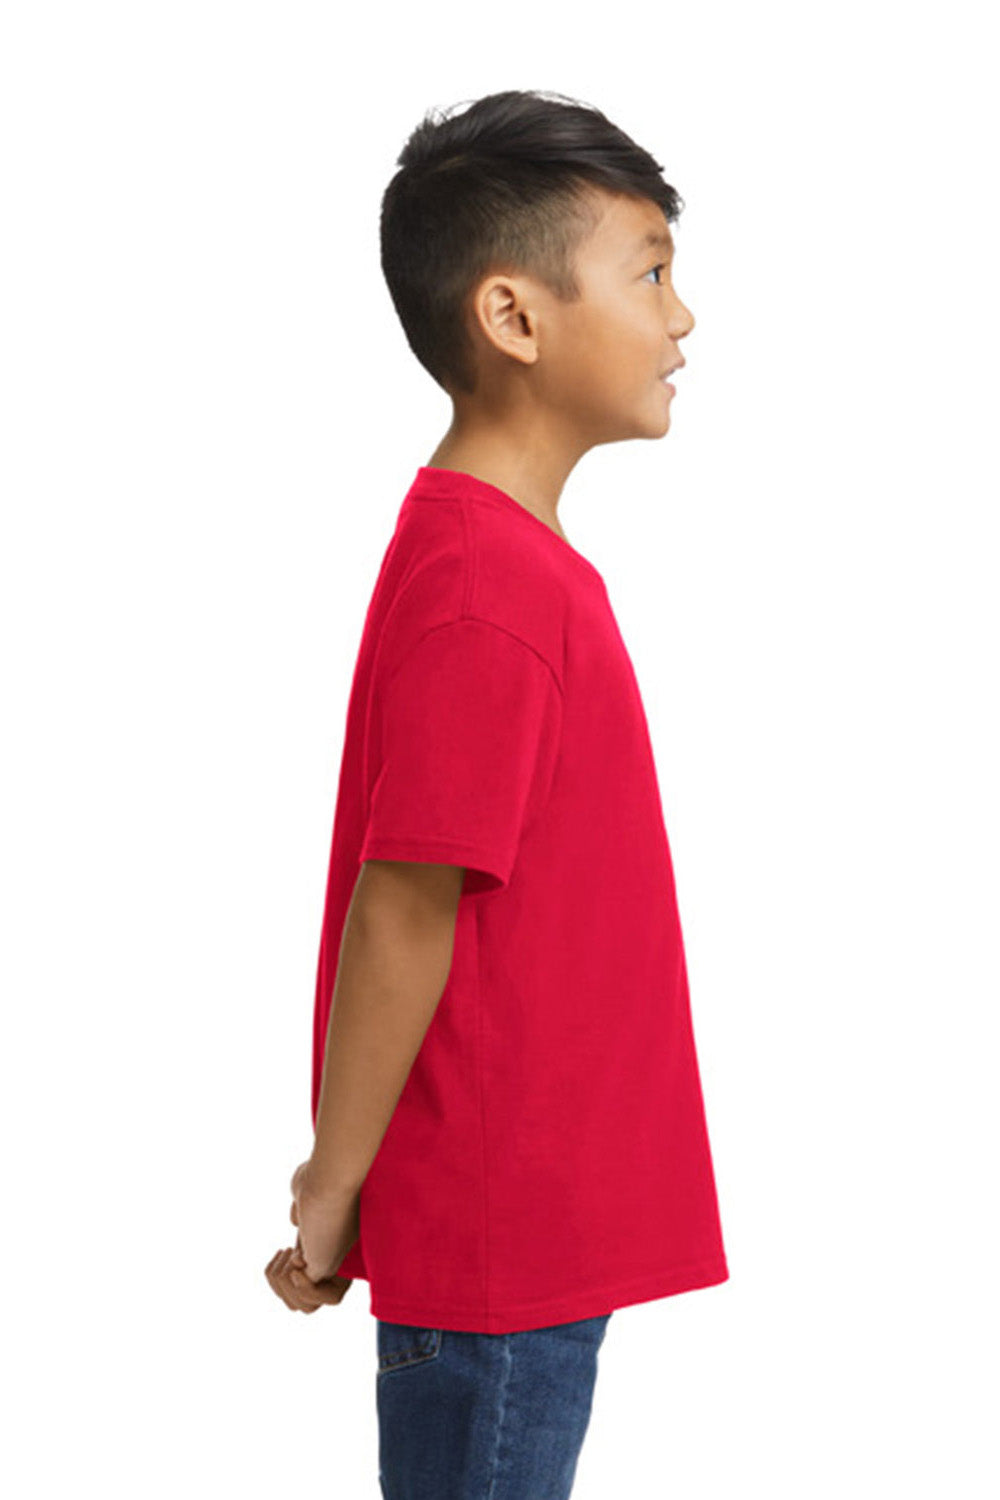 Gildan G650B Youth Softstyle Short Sleeve Crewneck T-Shirt Red Side